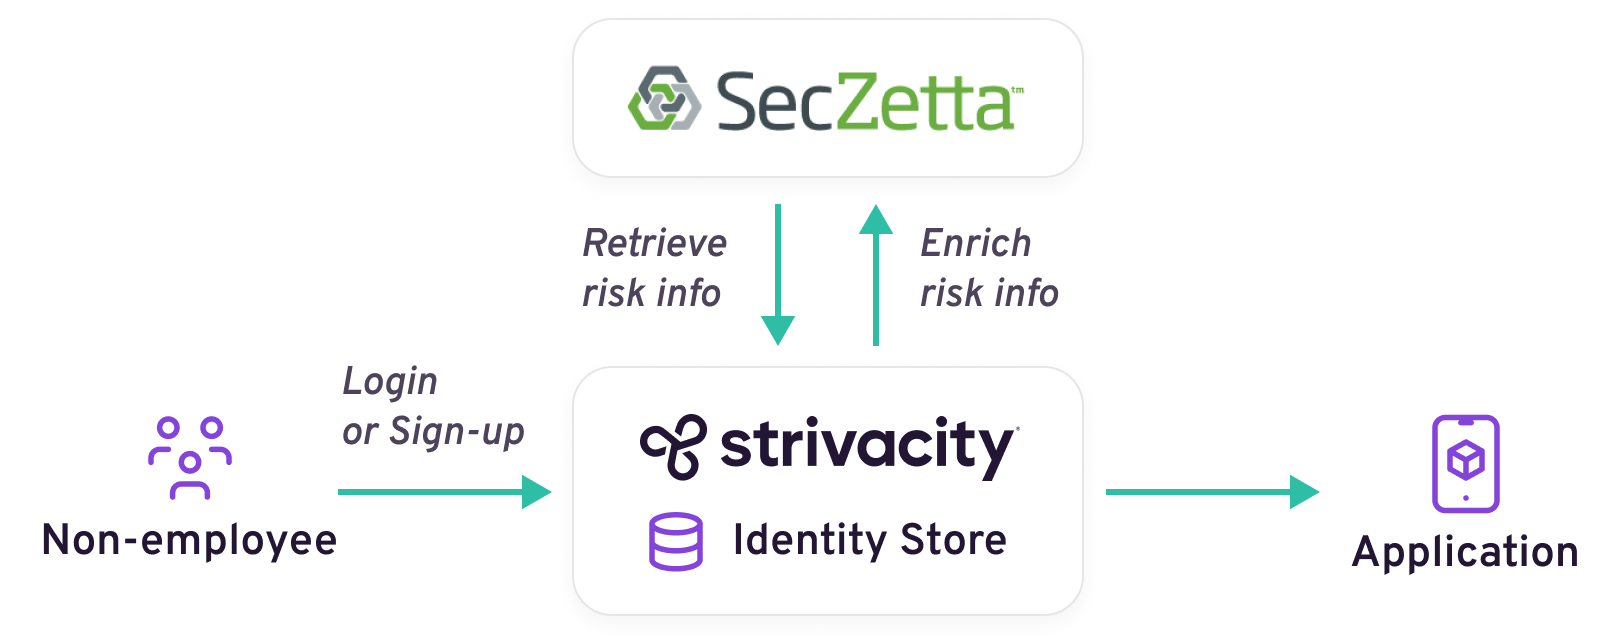 Strivacity - SecZetta integration diagram